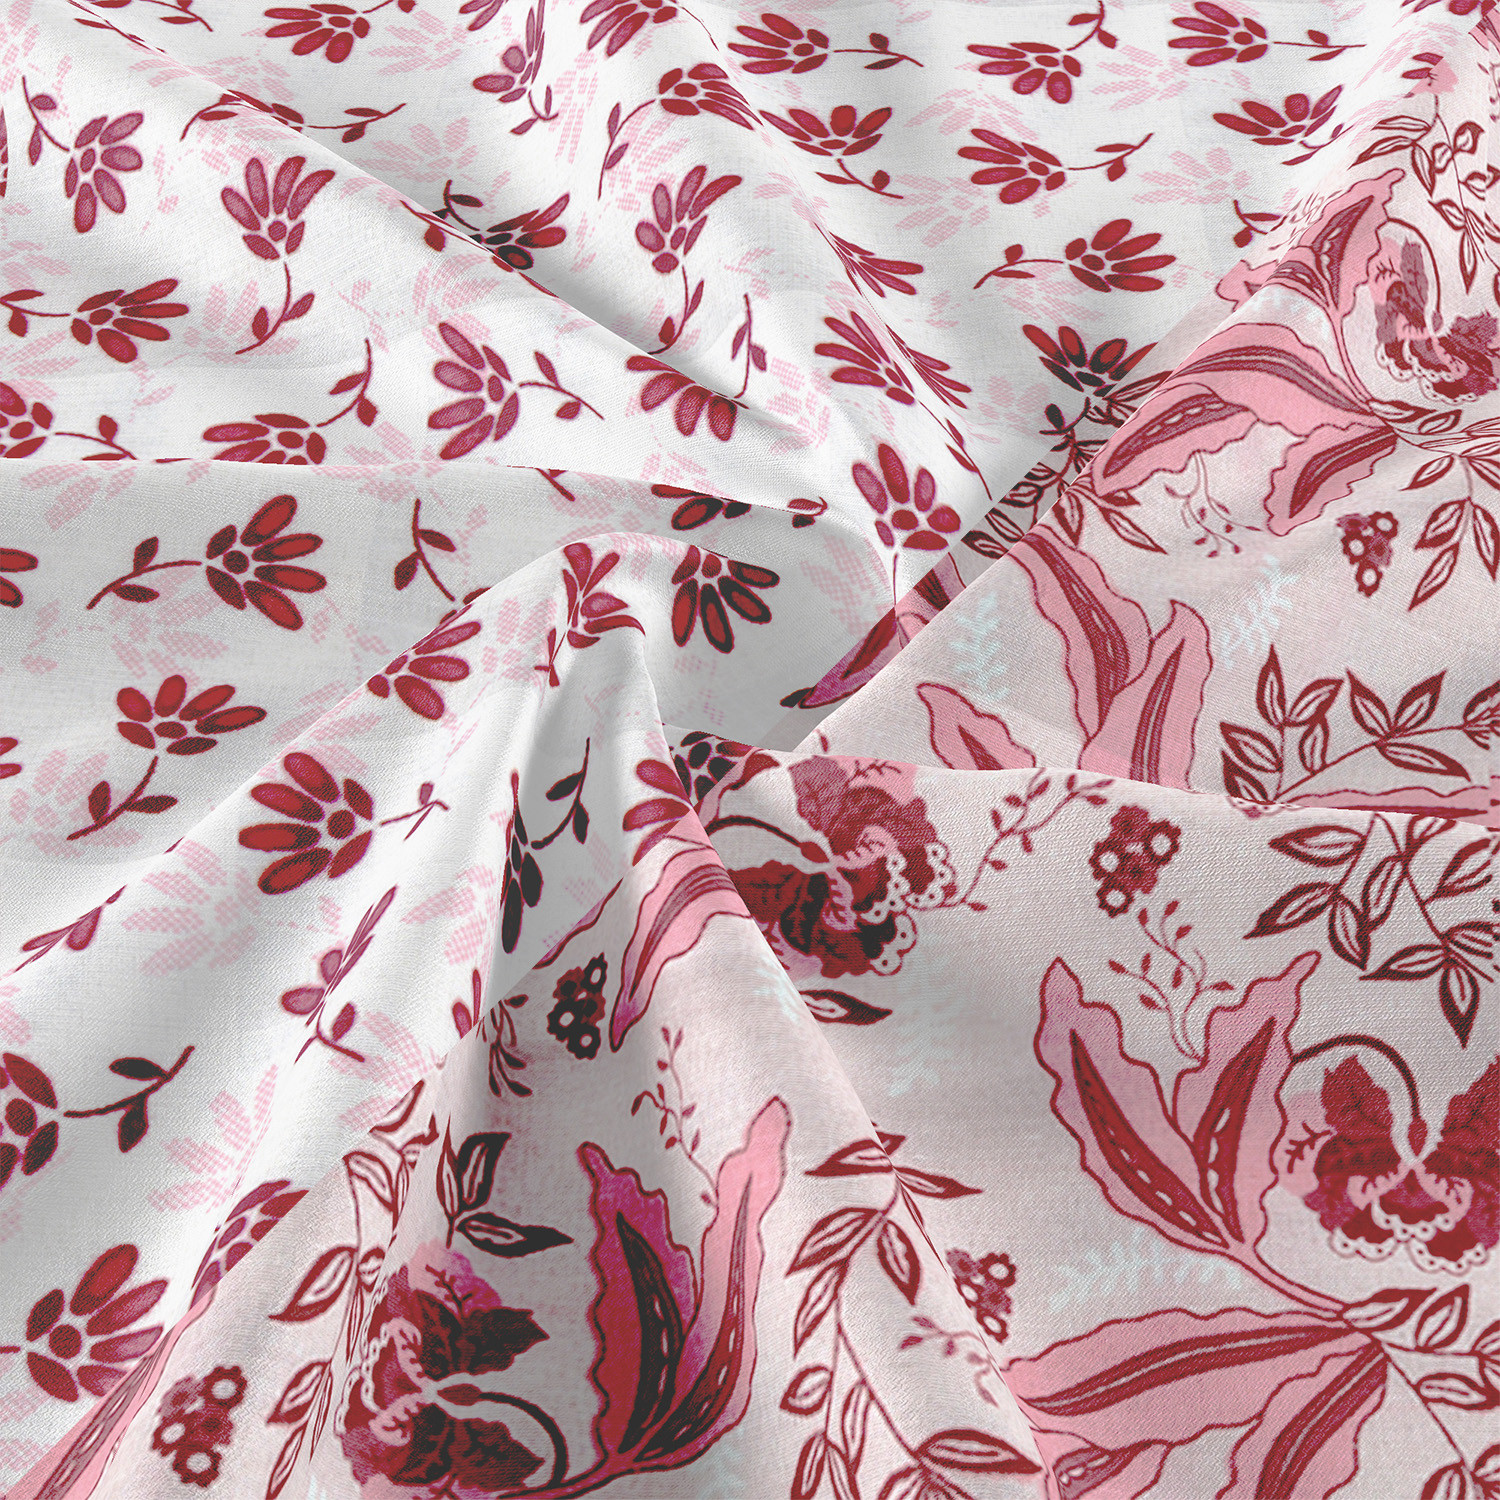 Kuber Industries Blanket | Cotton Double Bed Dohar | Blanket For Home | Reversible AC Blanket For Travelling | Blanket For Summer | Blanket For Winters | Flower Print | Pink